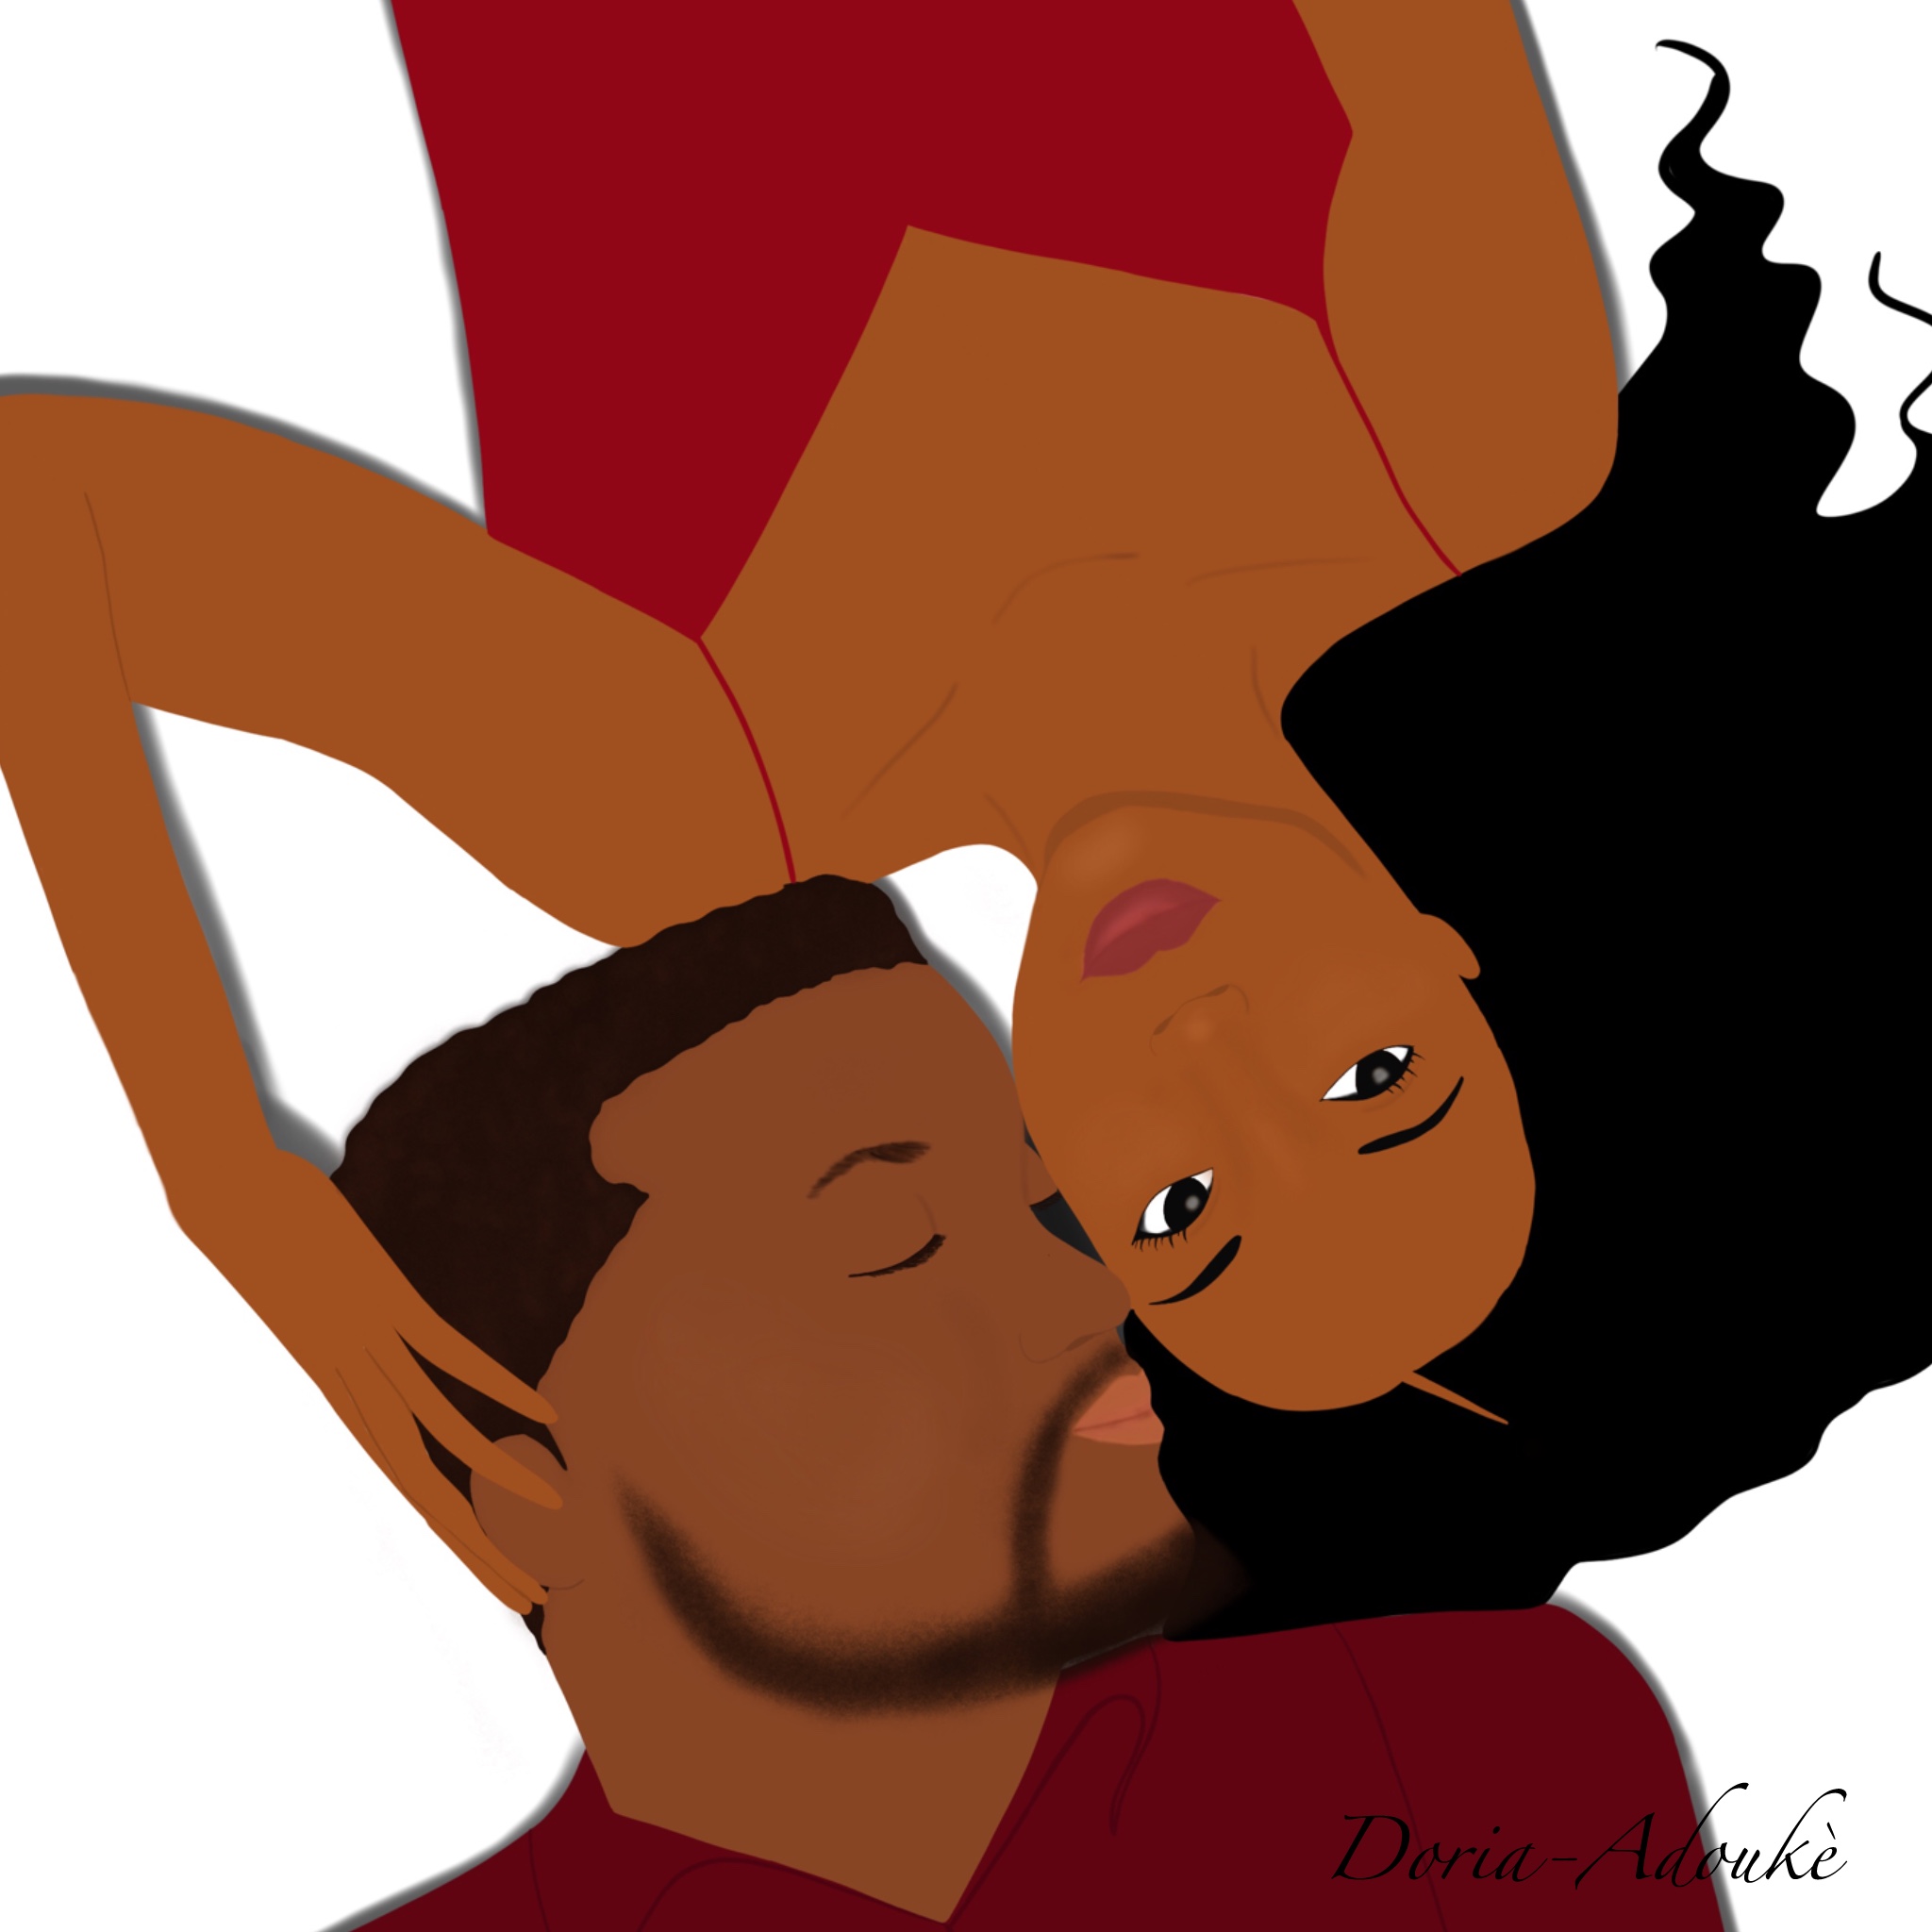 areeba khalid recommends Black Couples Cartoon